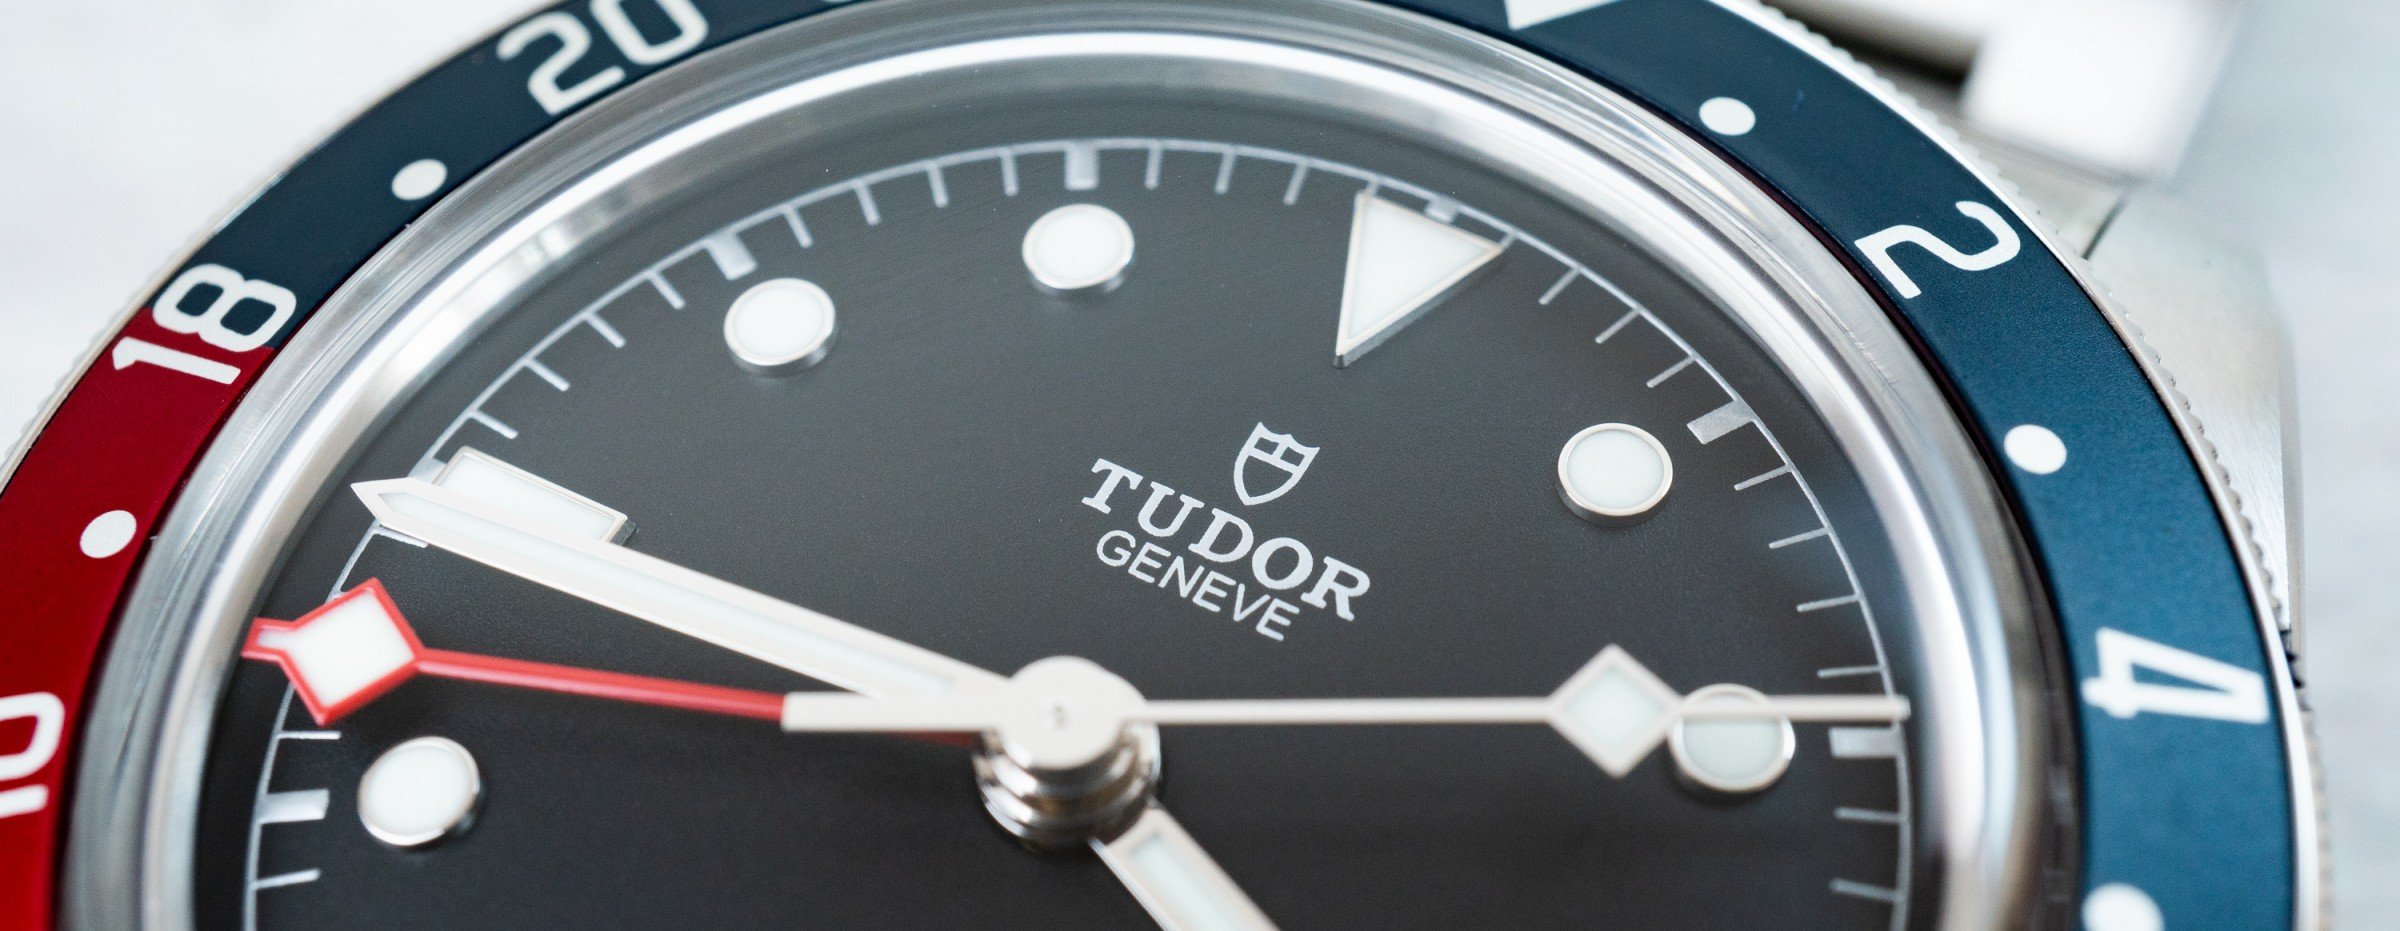 Tudor Geneve GMT Uhr